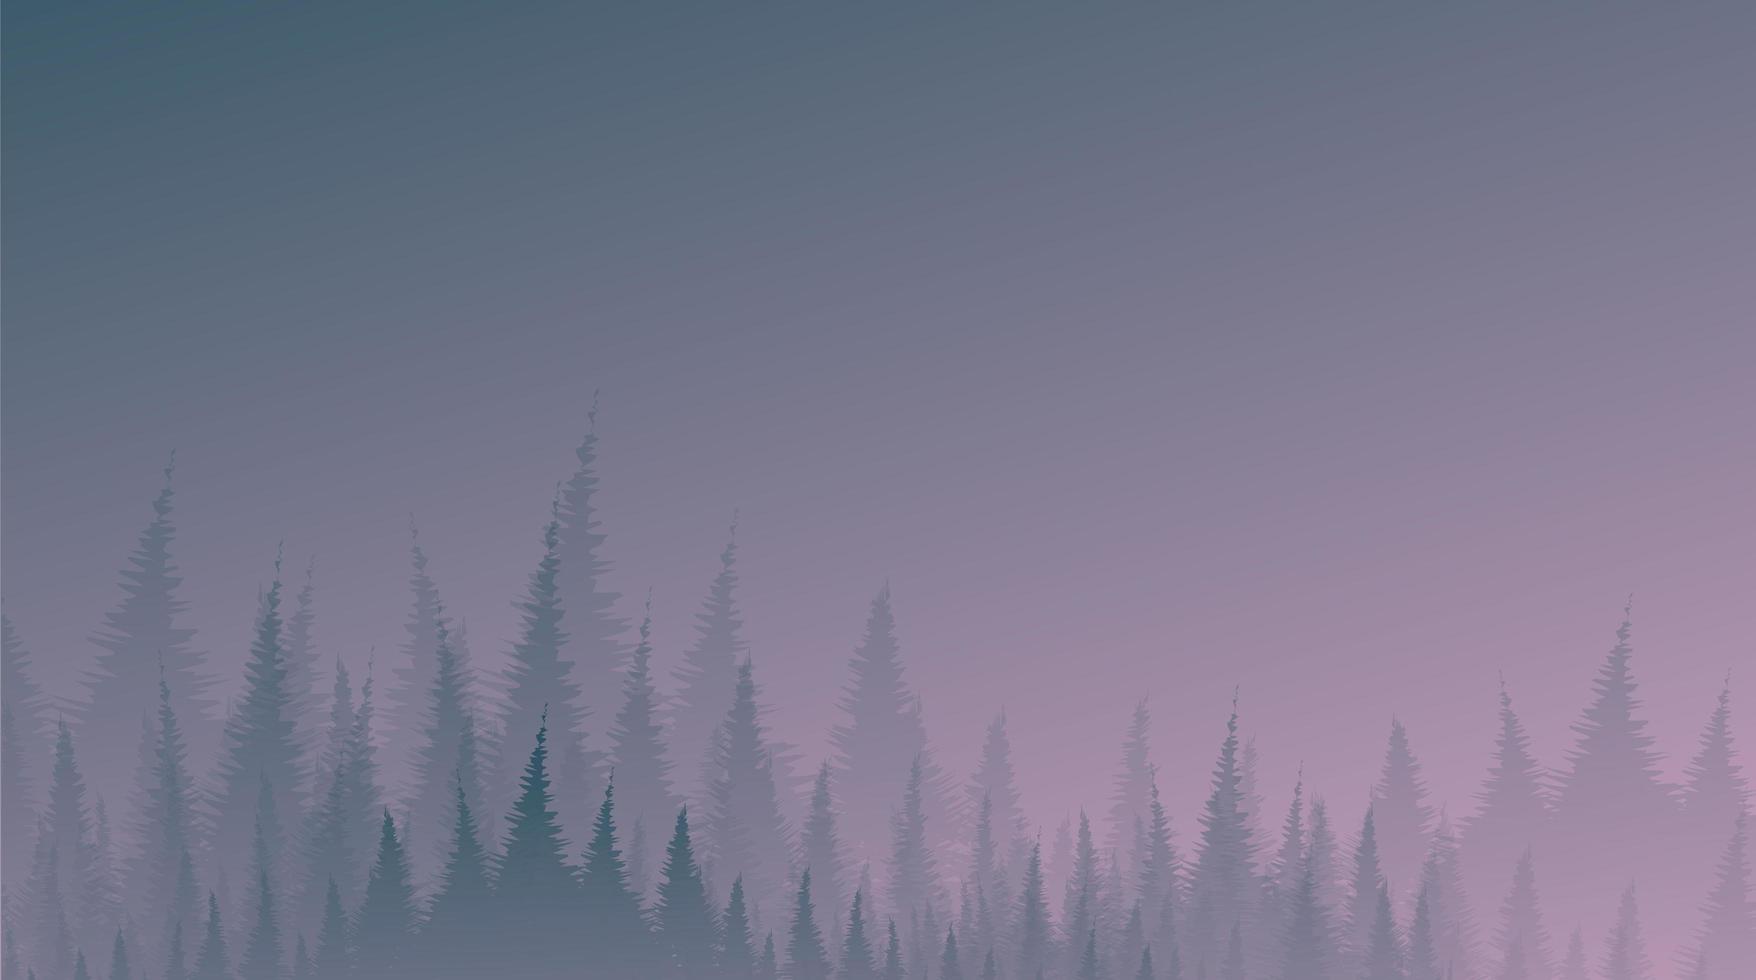 Night Foggy and mist Pine Forest, landscape background, imagination concept design. vector